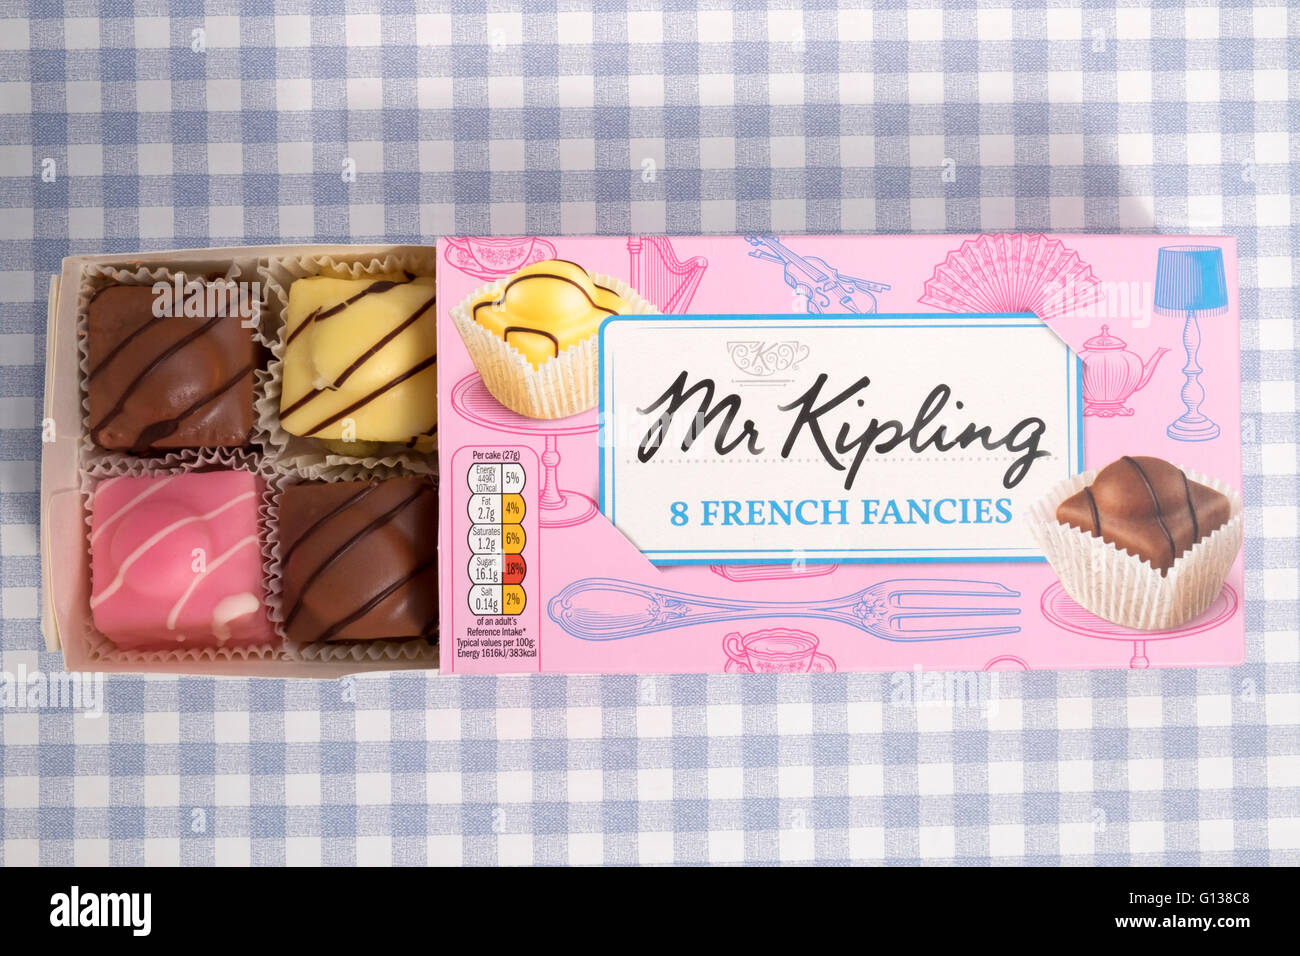 Mr kipling French Fancies Stock Photo